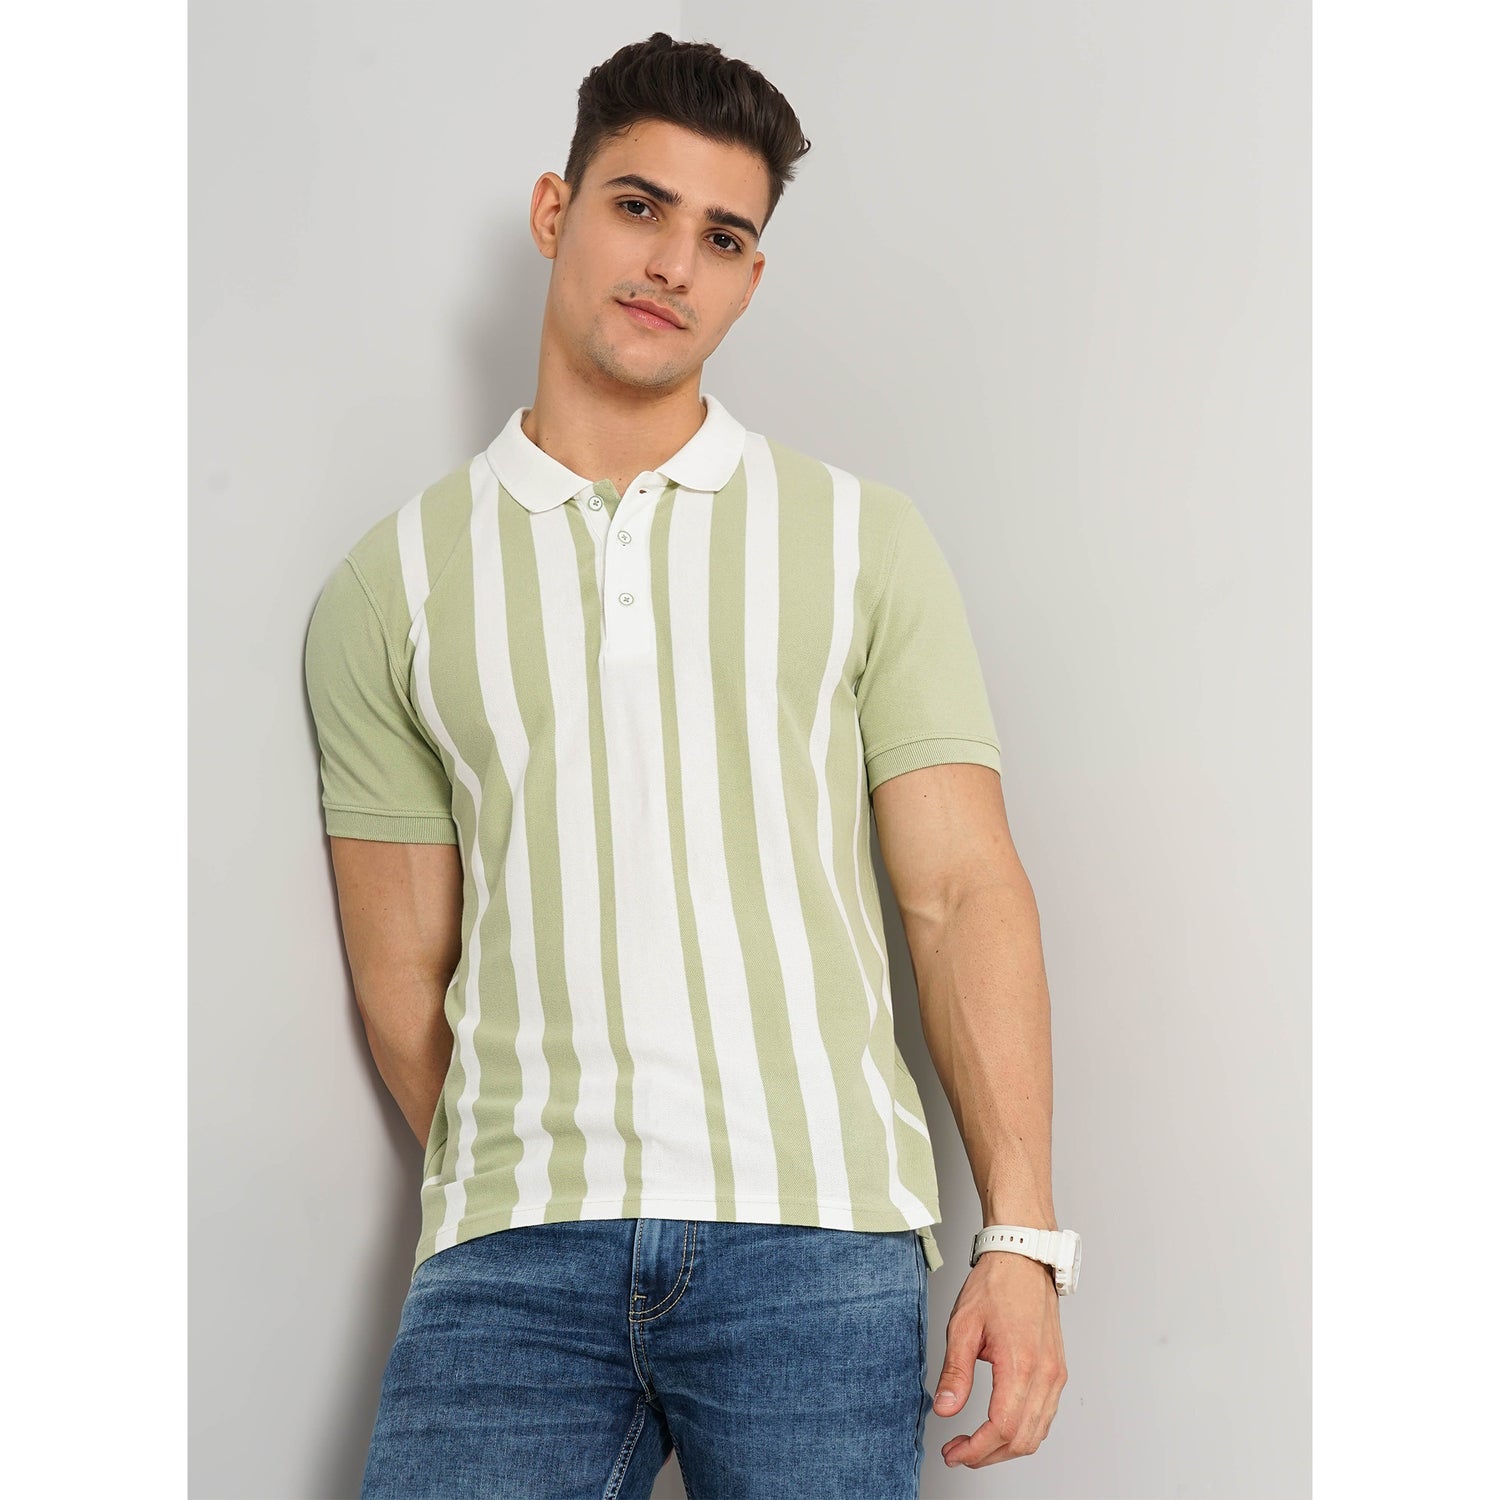 Green Cotton Fashion Polo Tshirt